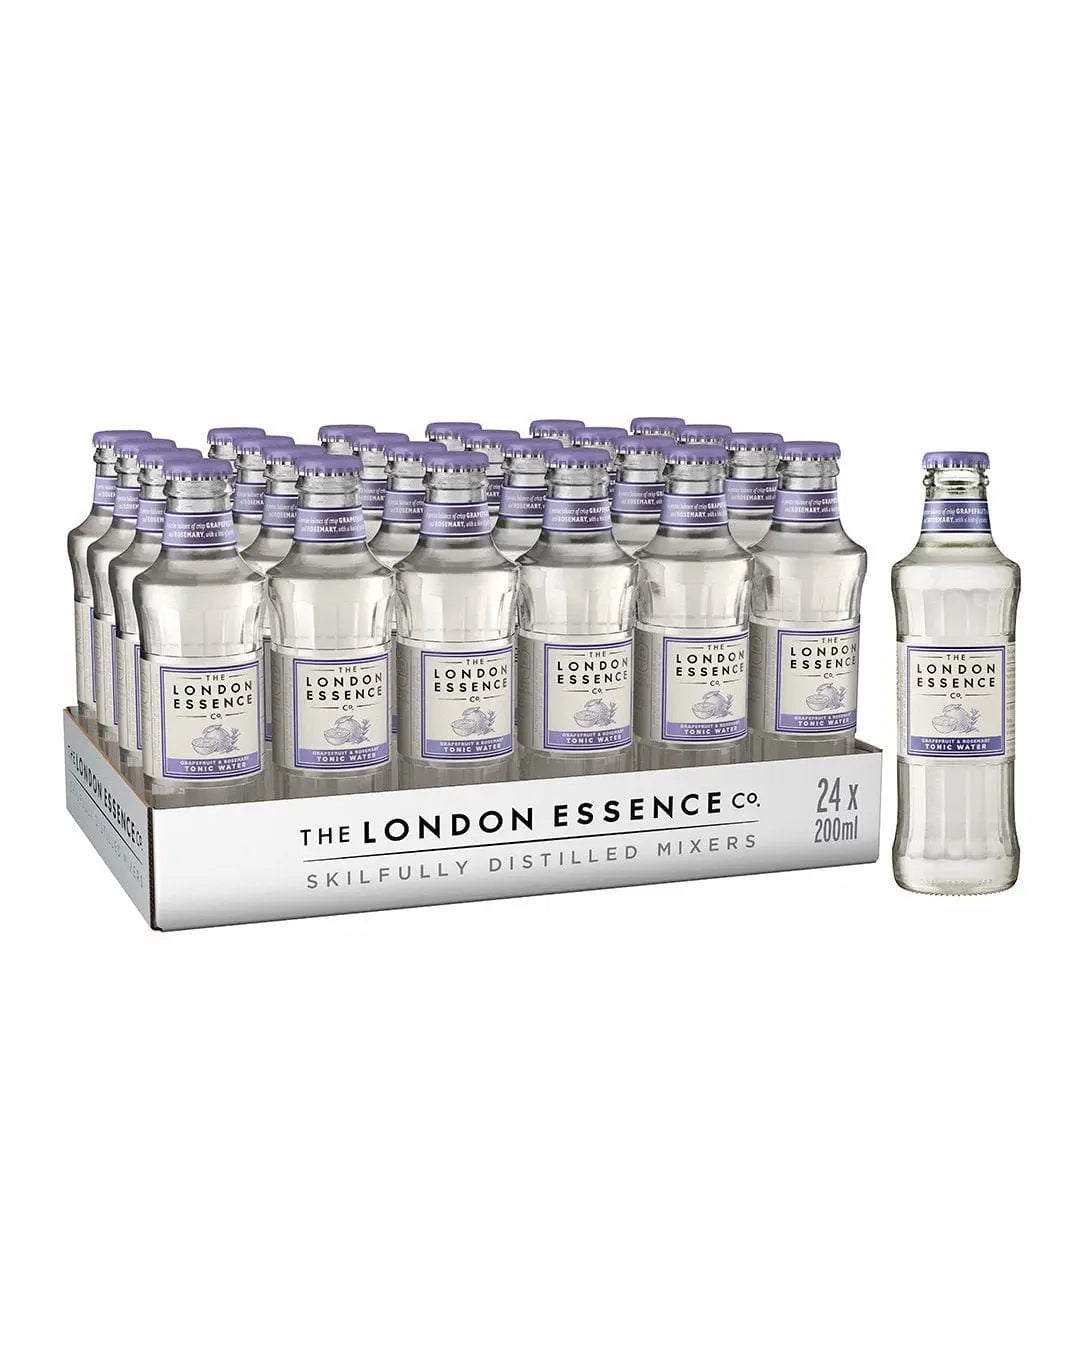 London Essence Company Grapefruit & Rosemary Tonic Water Bottle Multipack, 24 x 200 ml Tonics